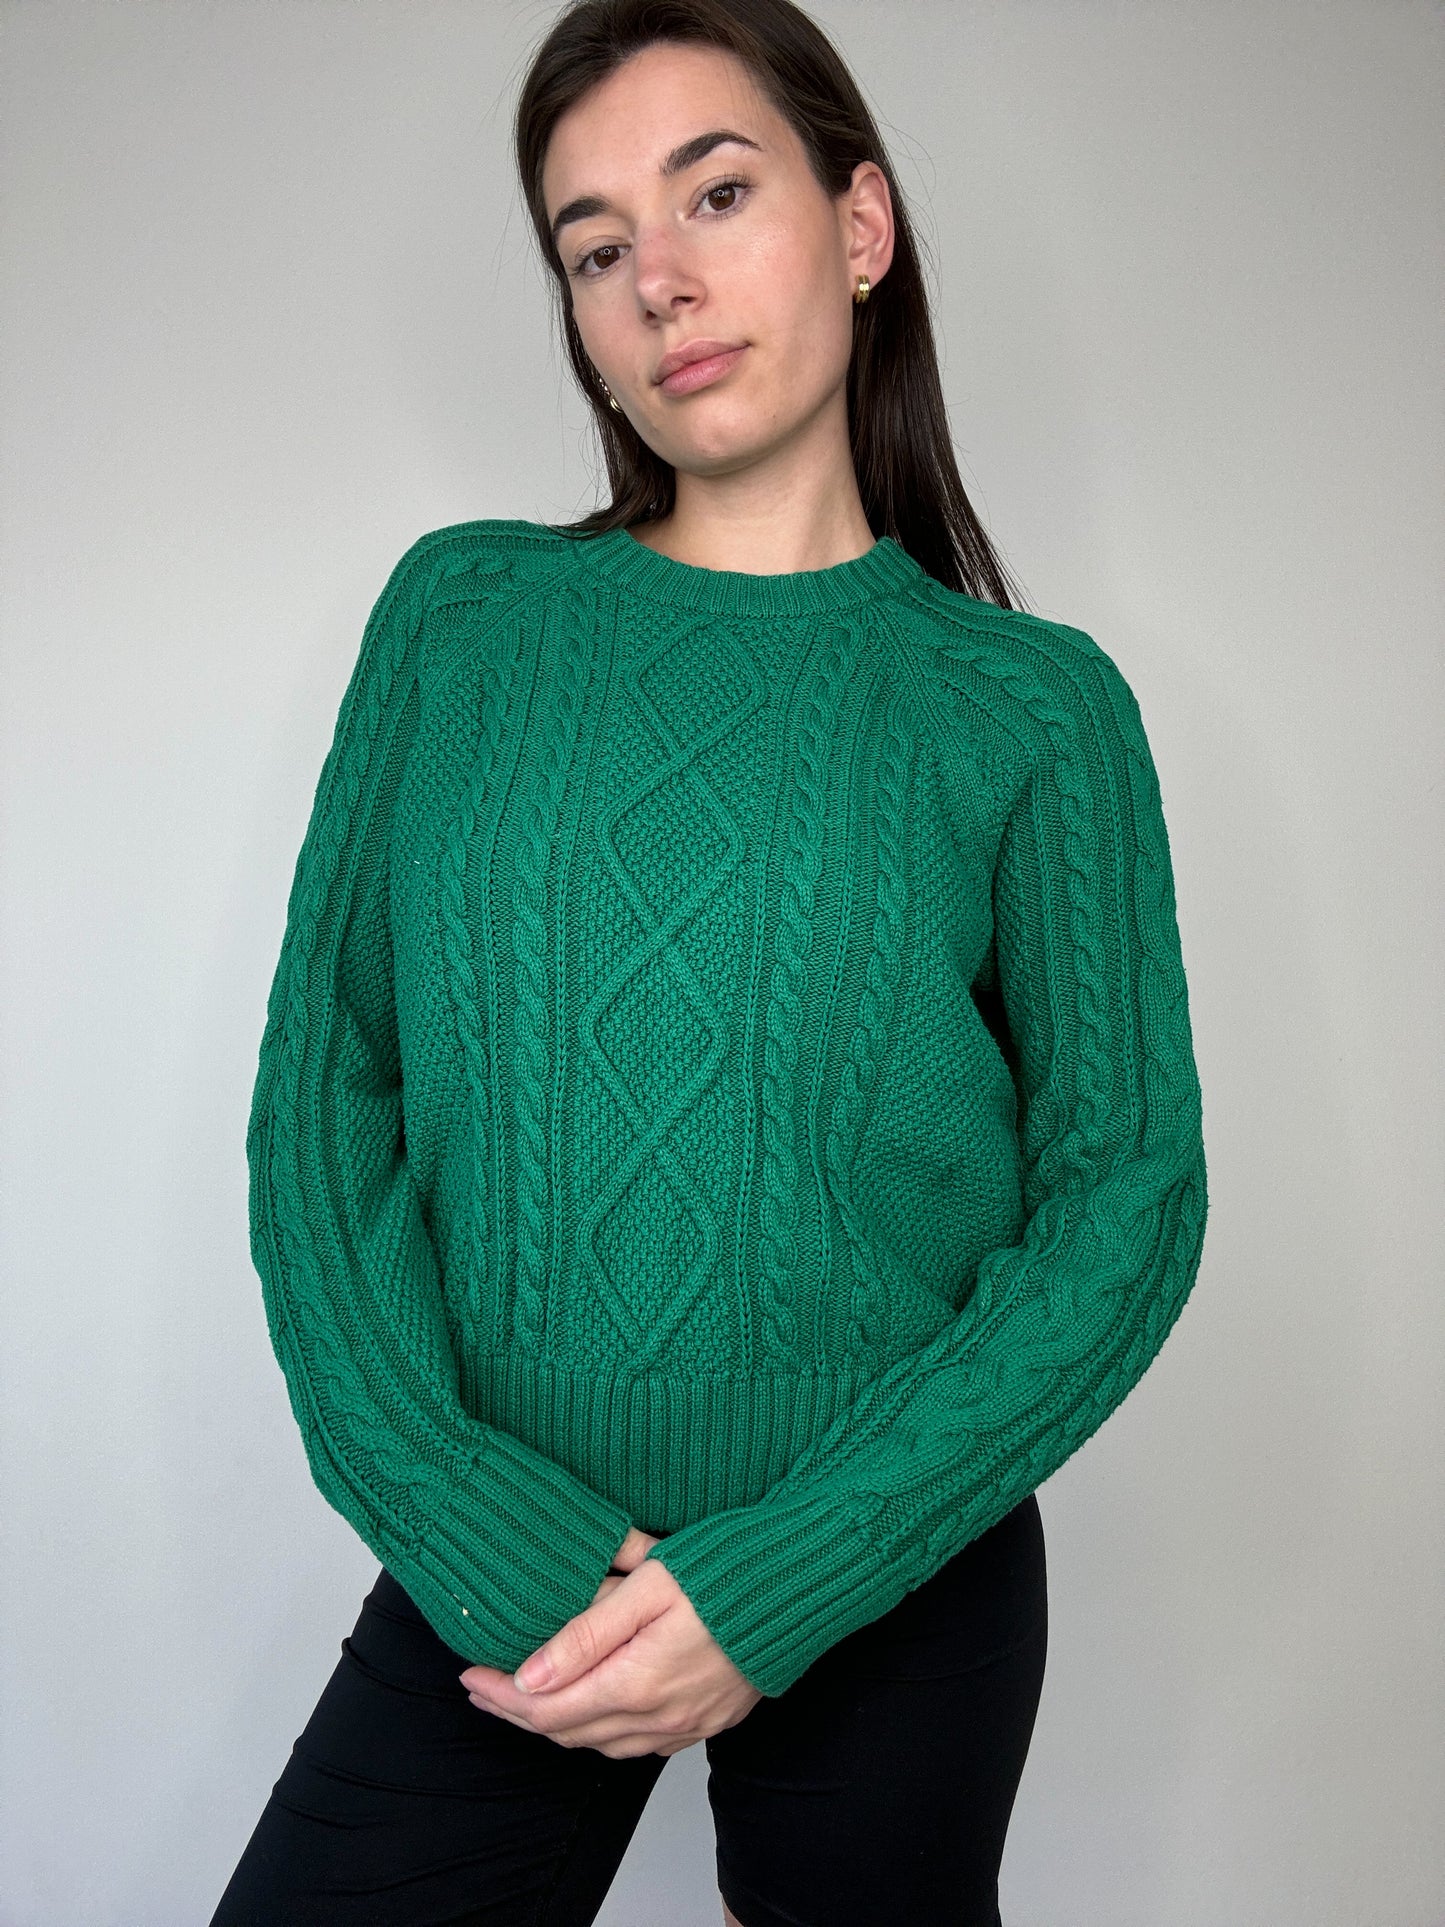 Gap Knit Sweater (S)